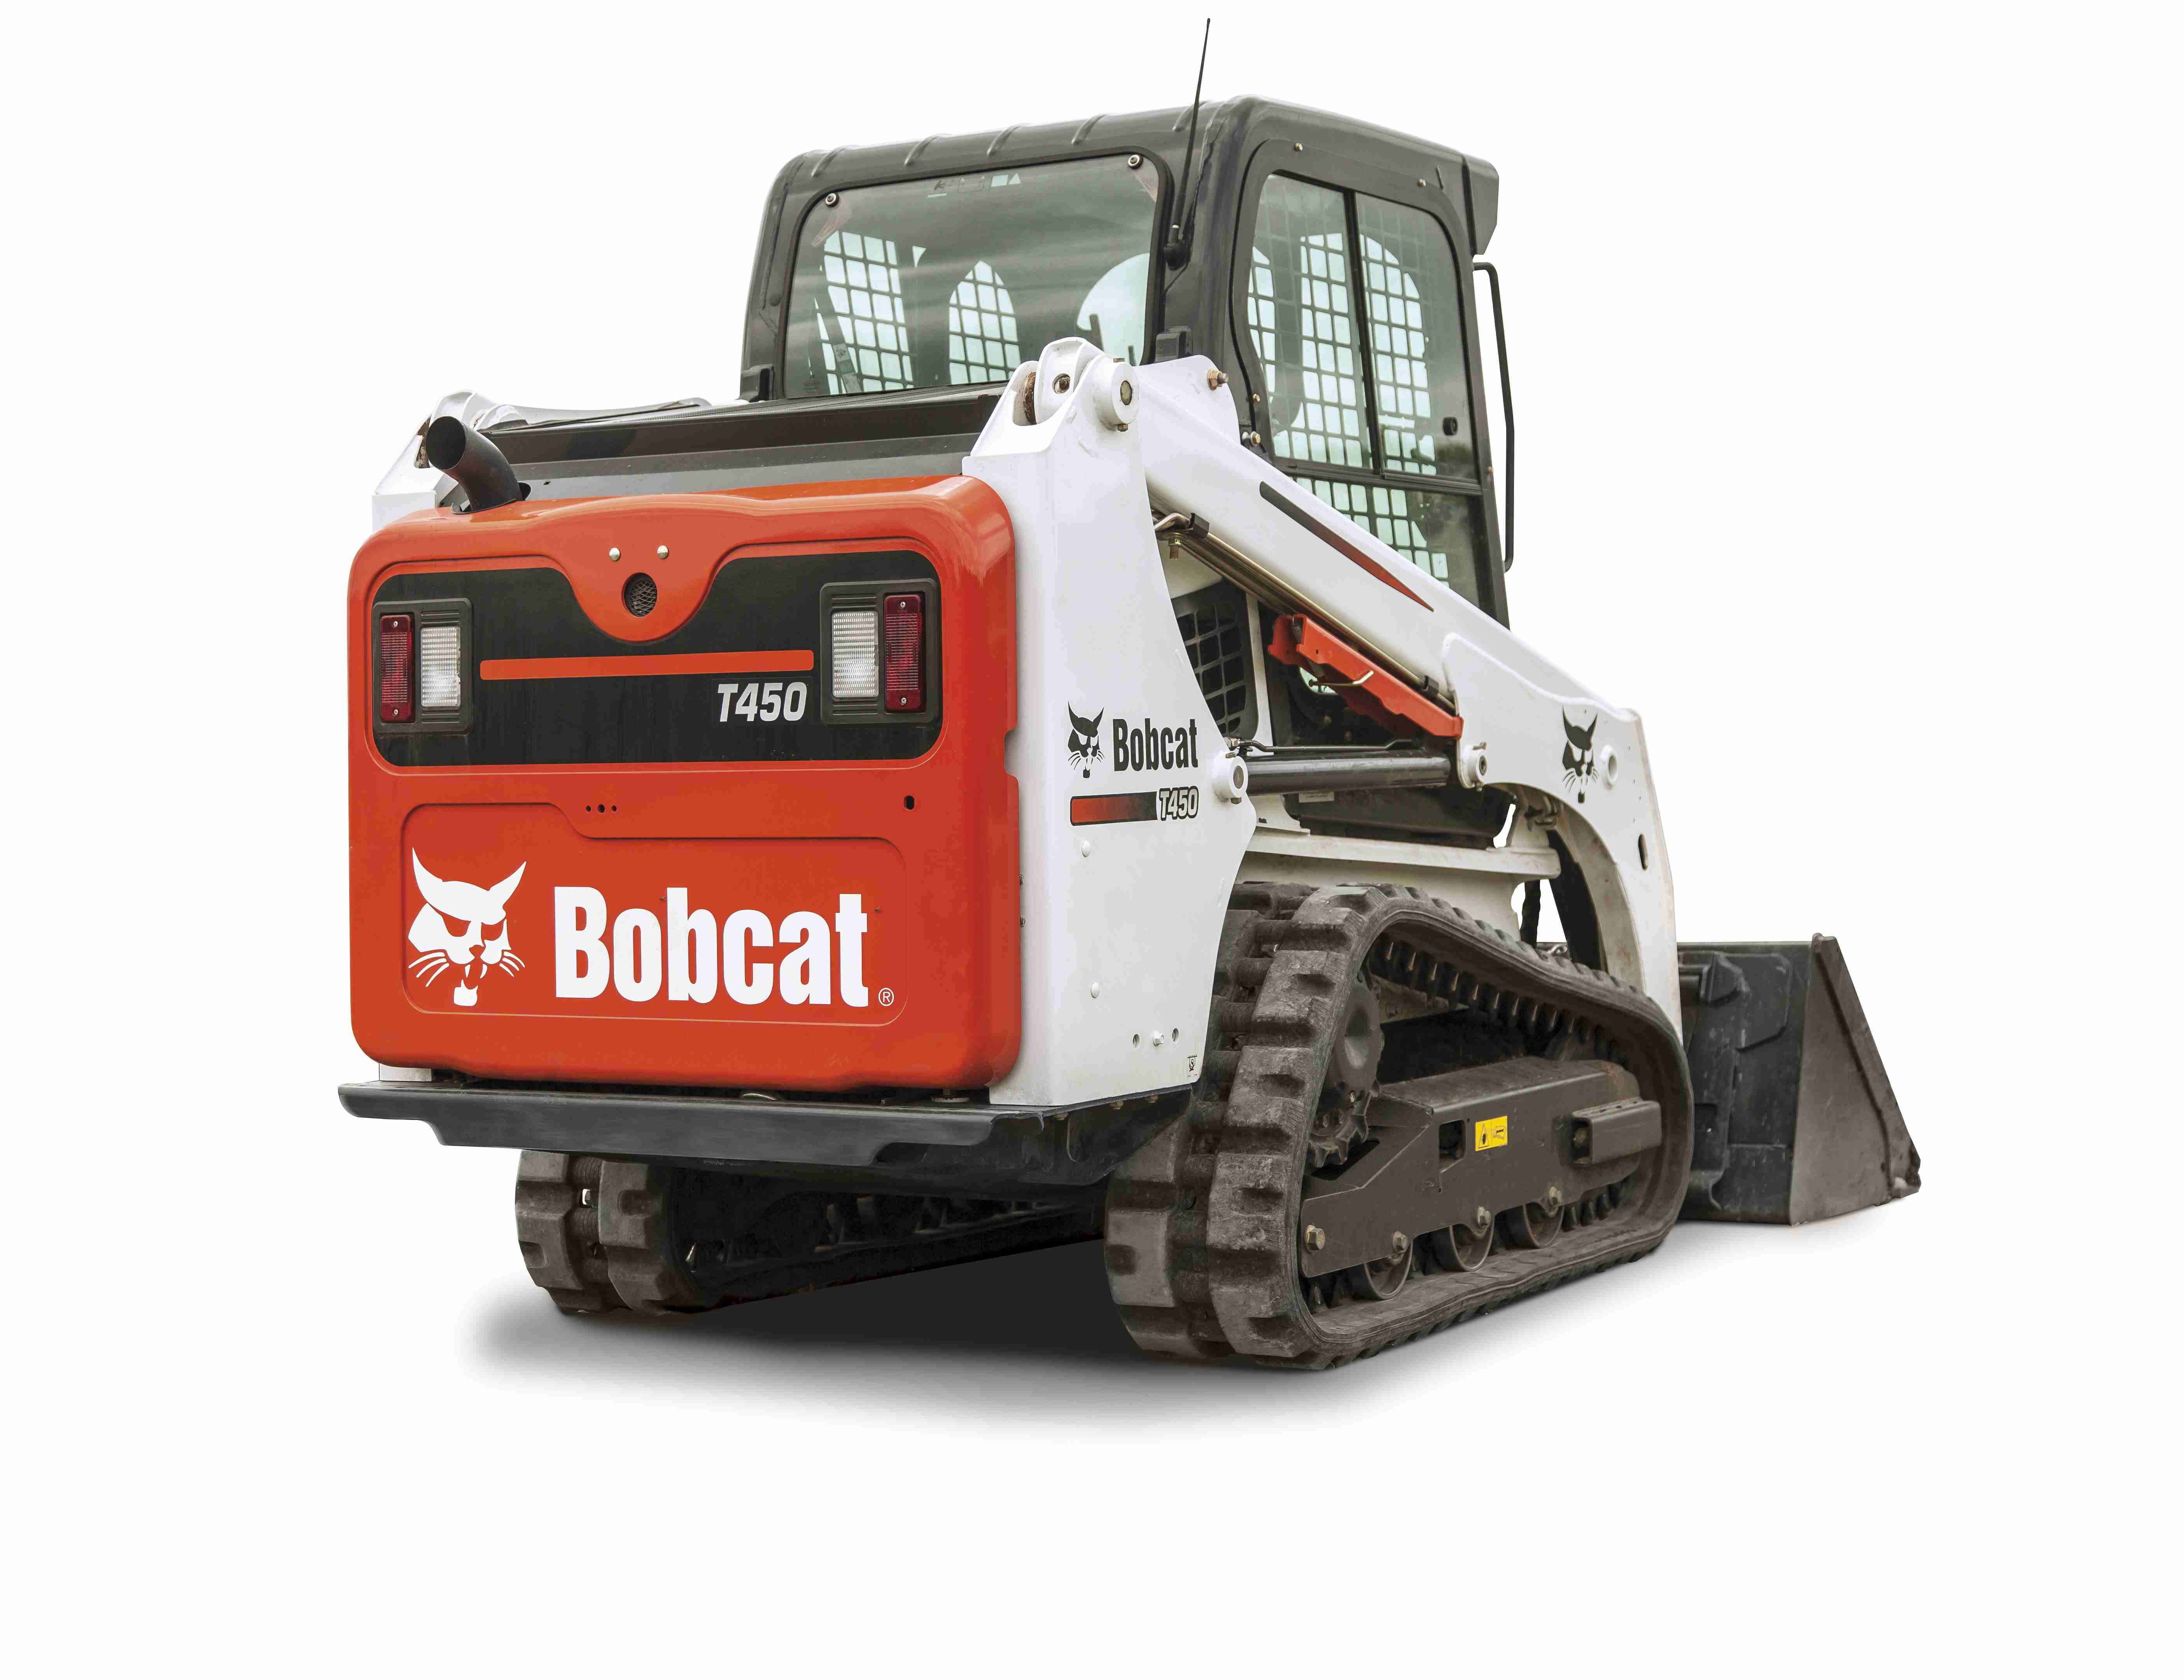 Bobcat t. Bobcat 450. Мини погрузчик Бобкэт s850. Bobcat t450. Bobcat s/t 450.